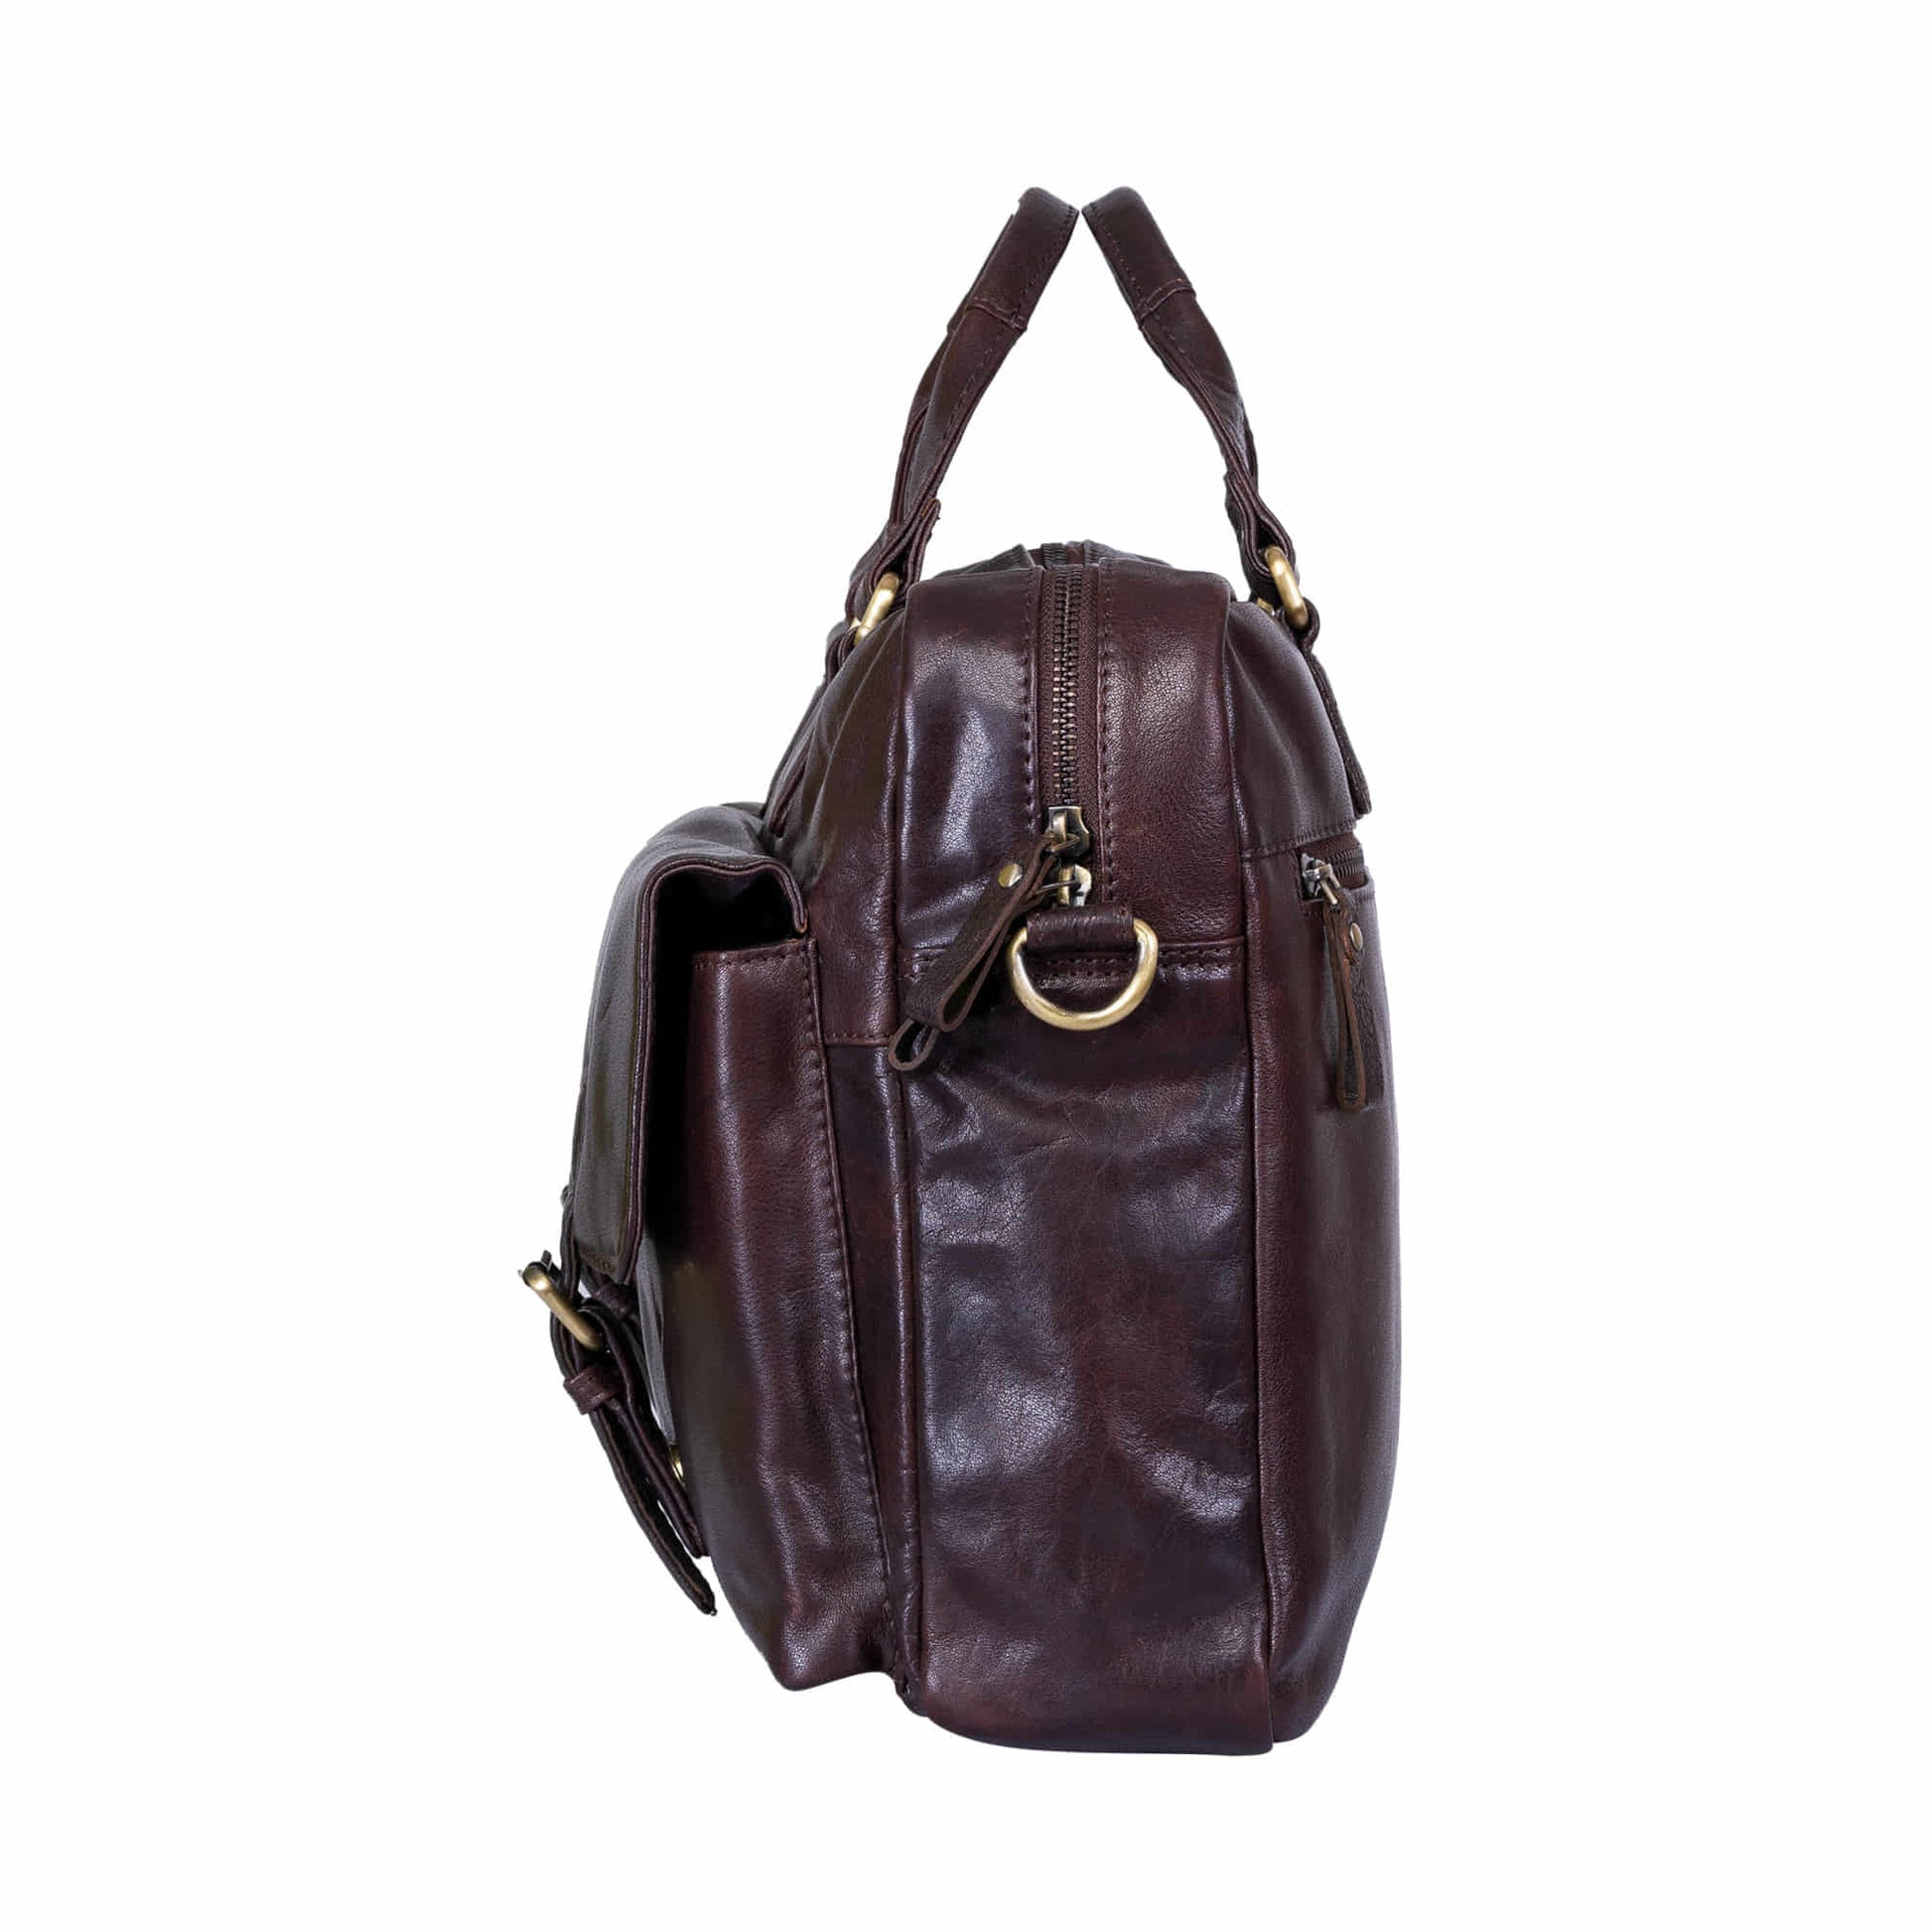 Style n Craft 392500 Cross Body Messenger Bag in Full Grain Dark Brown Vintage Leather - Side view of the messenger bag